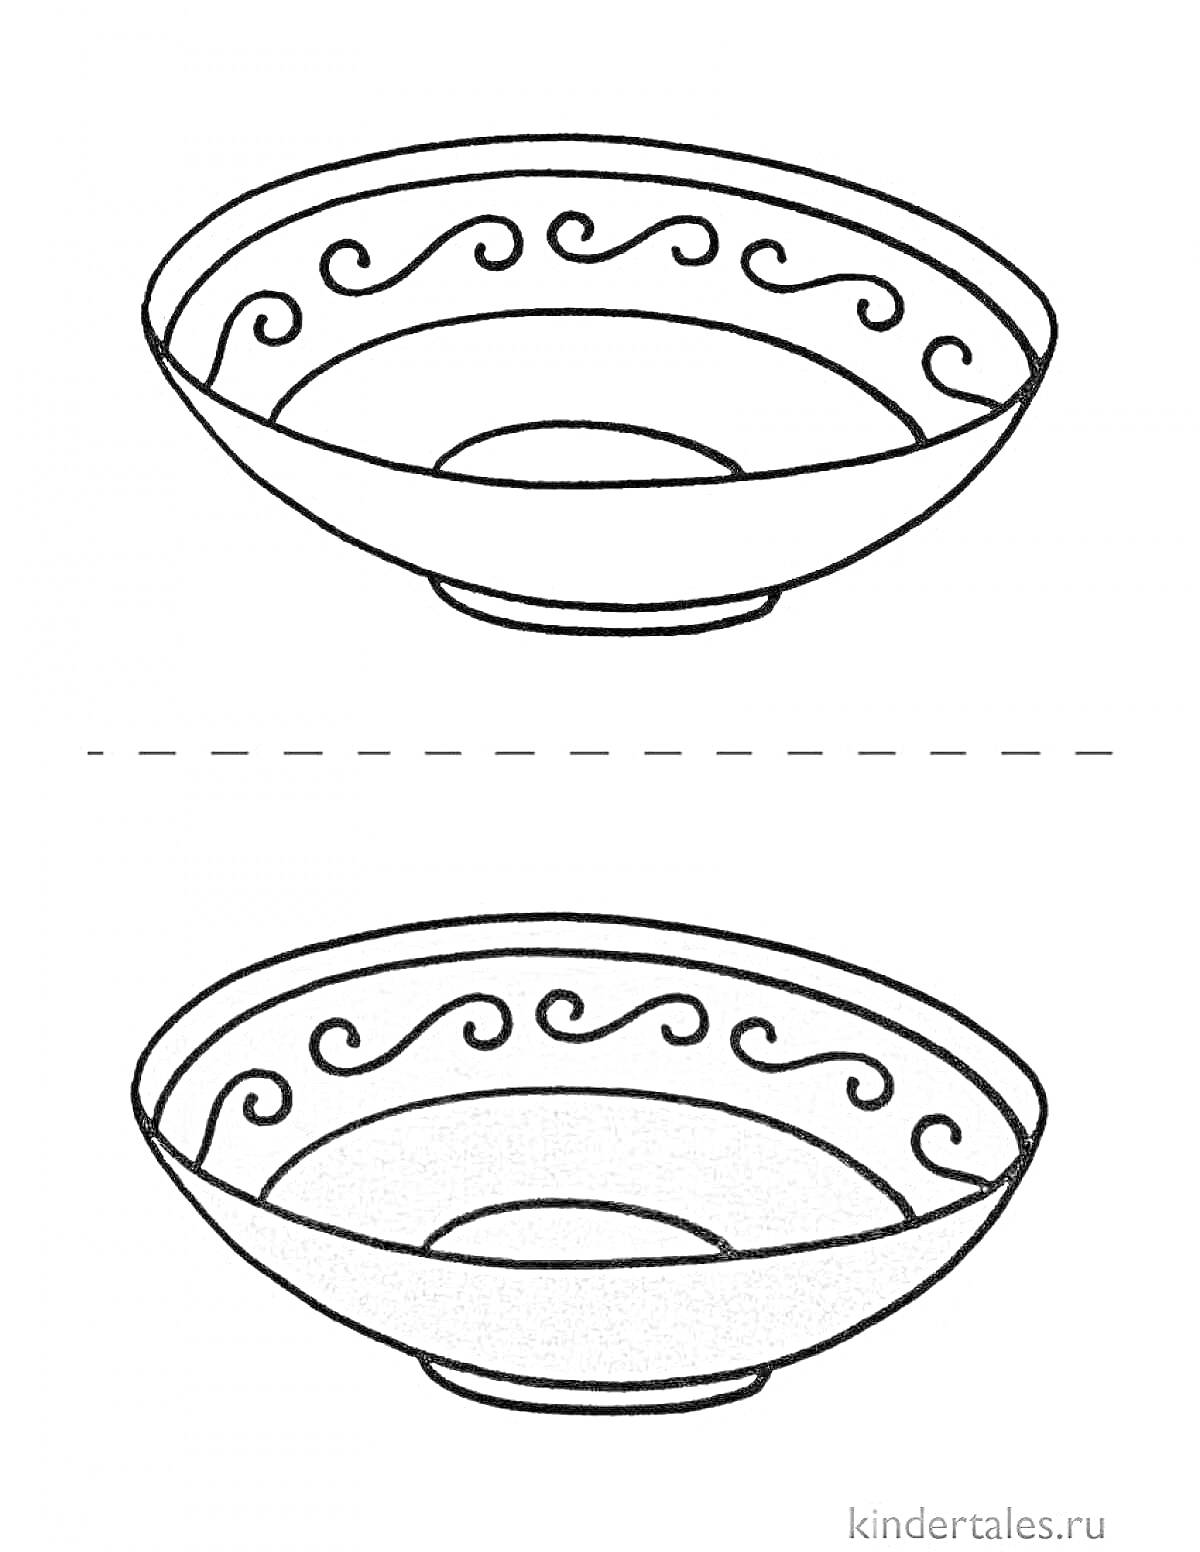 Тарелка с волнистым орнаментом по краям